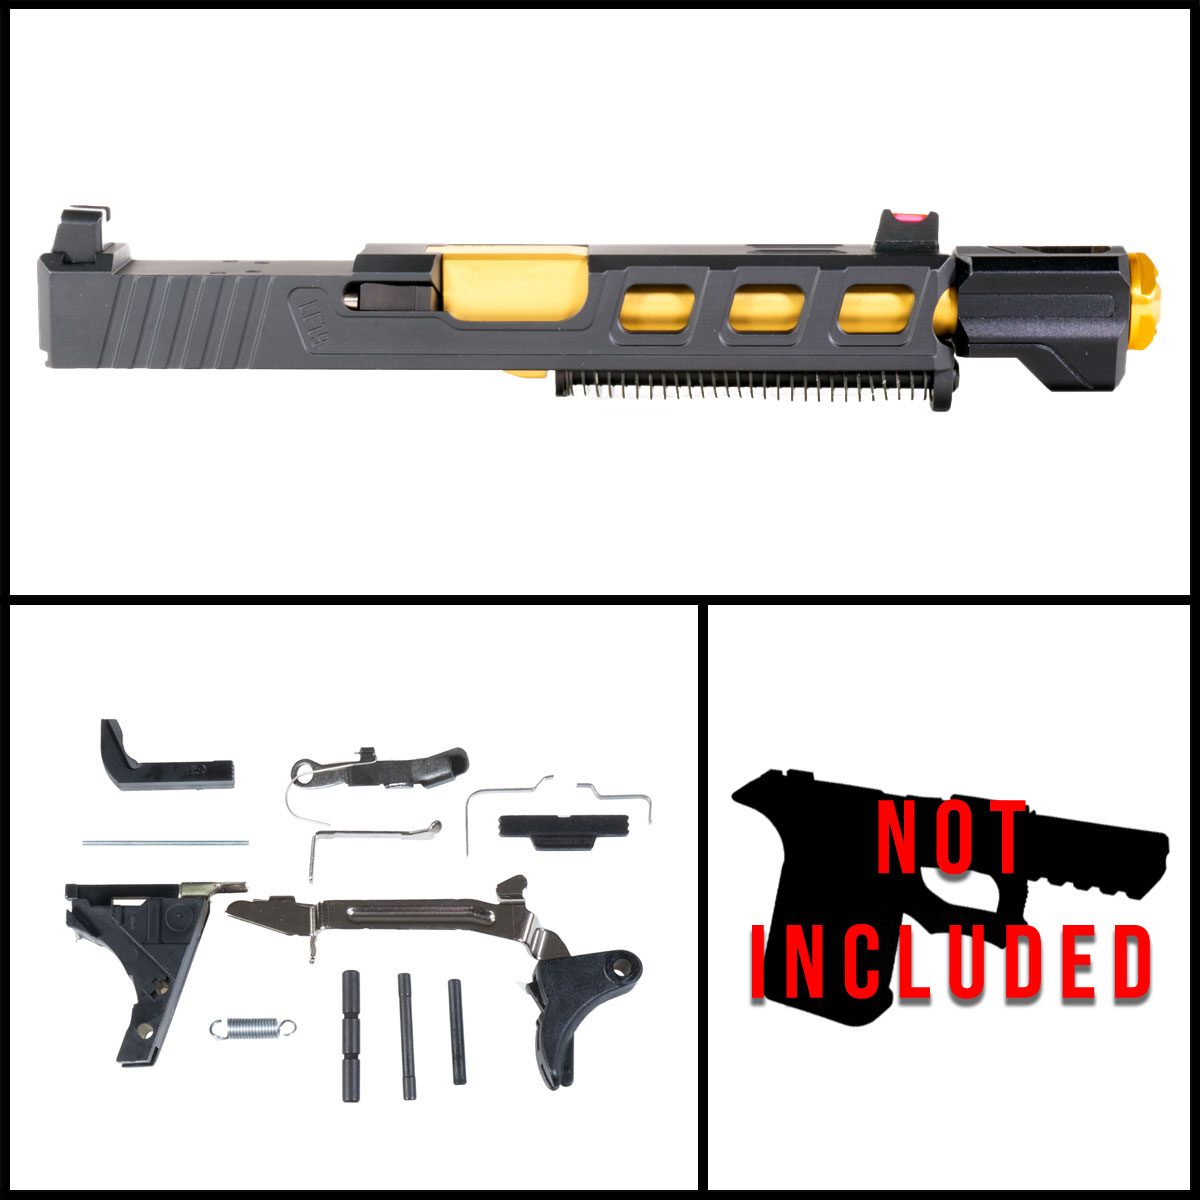 DTT 'Peng w/ Tyrant Designs Compensator' 9mm Full Pistol Build Kit (Everything Minus Frame) - Glock 19 Gen 1-3 Compatible